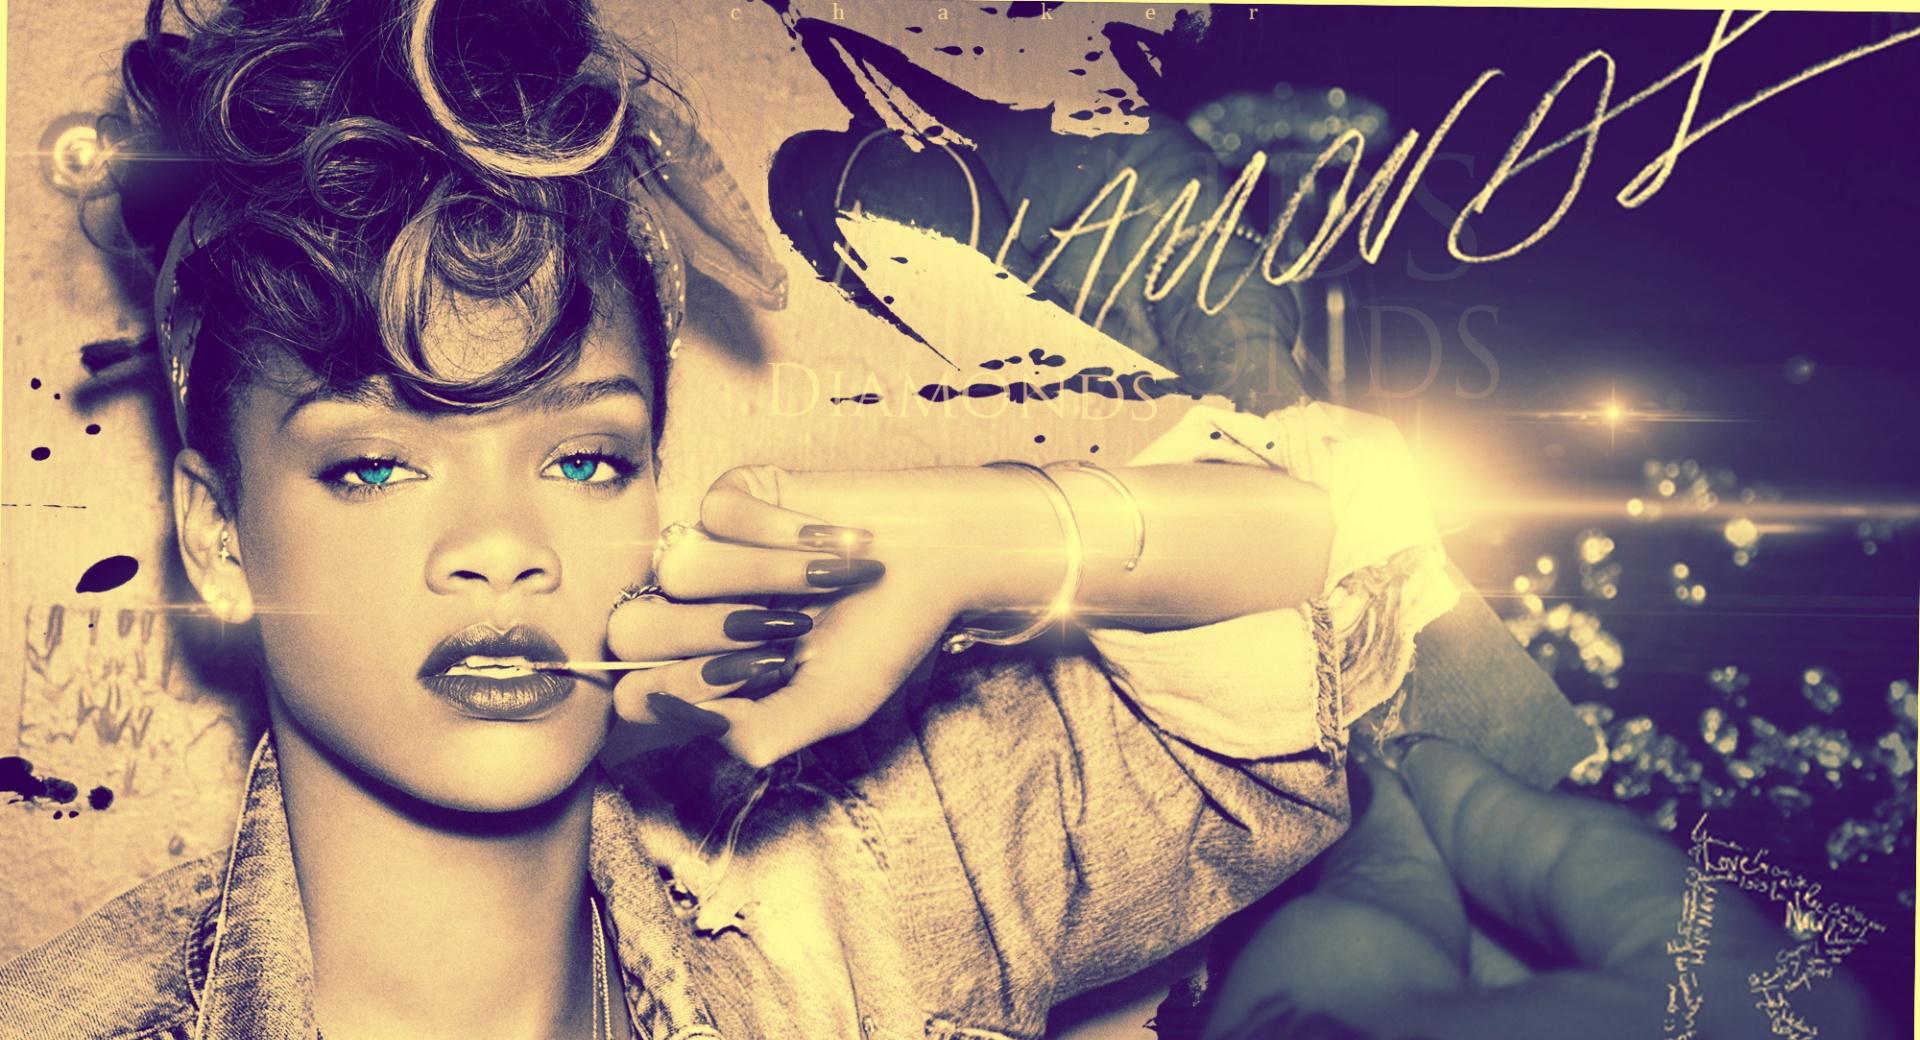 Rihanna-Diamonds at 1600 x 1200 size wallpapers HD quality